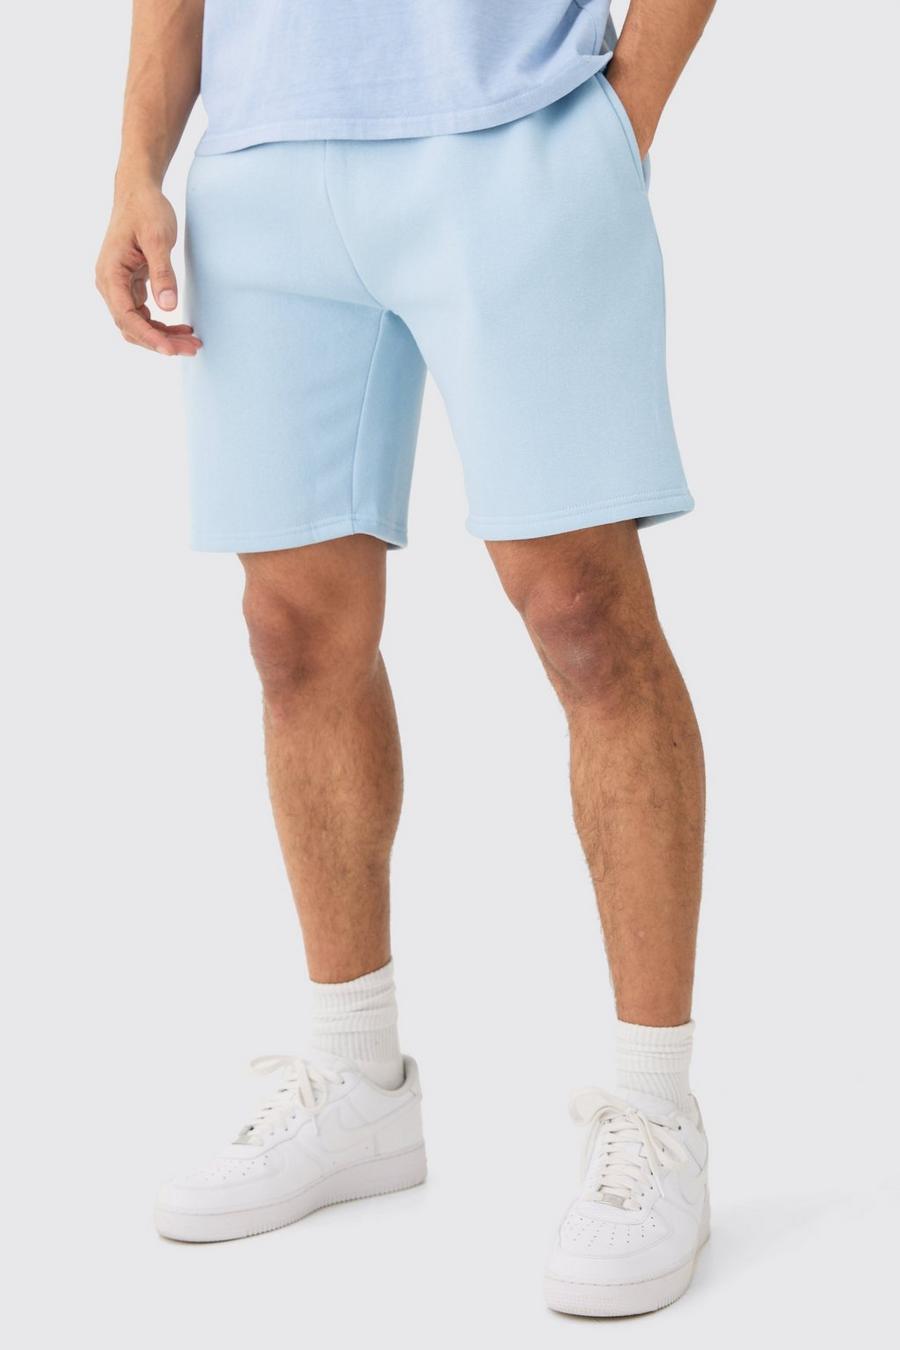 Lockere mittellange Basic Shorts, Baby blue